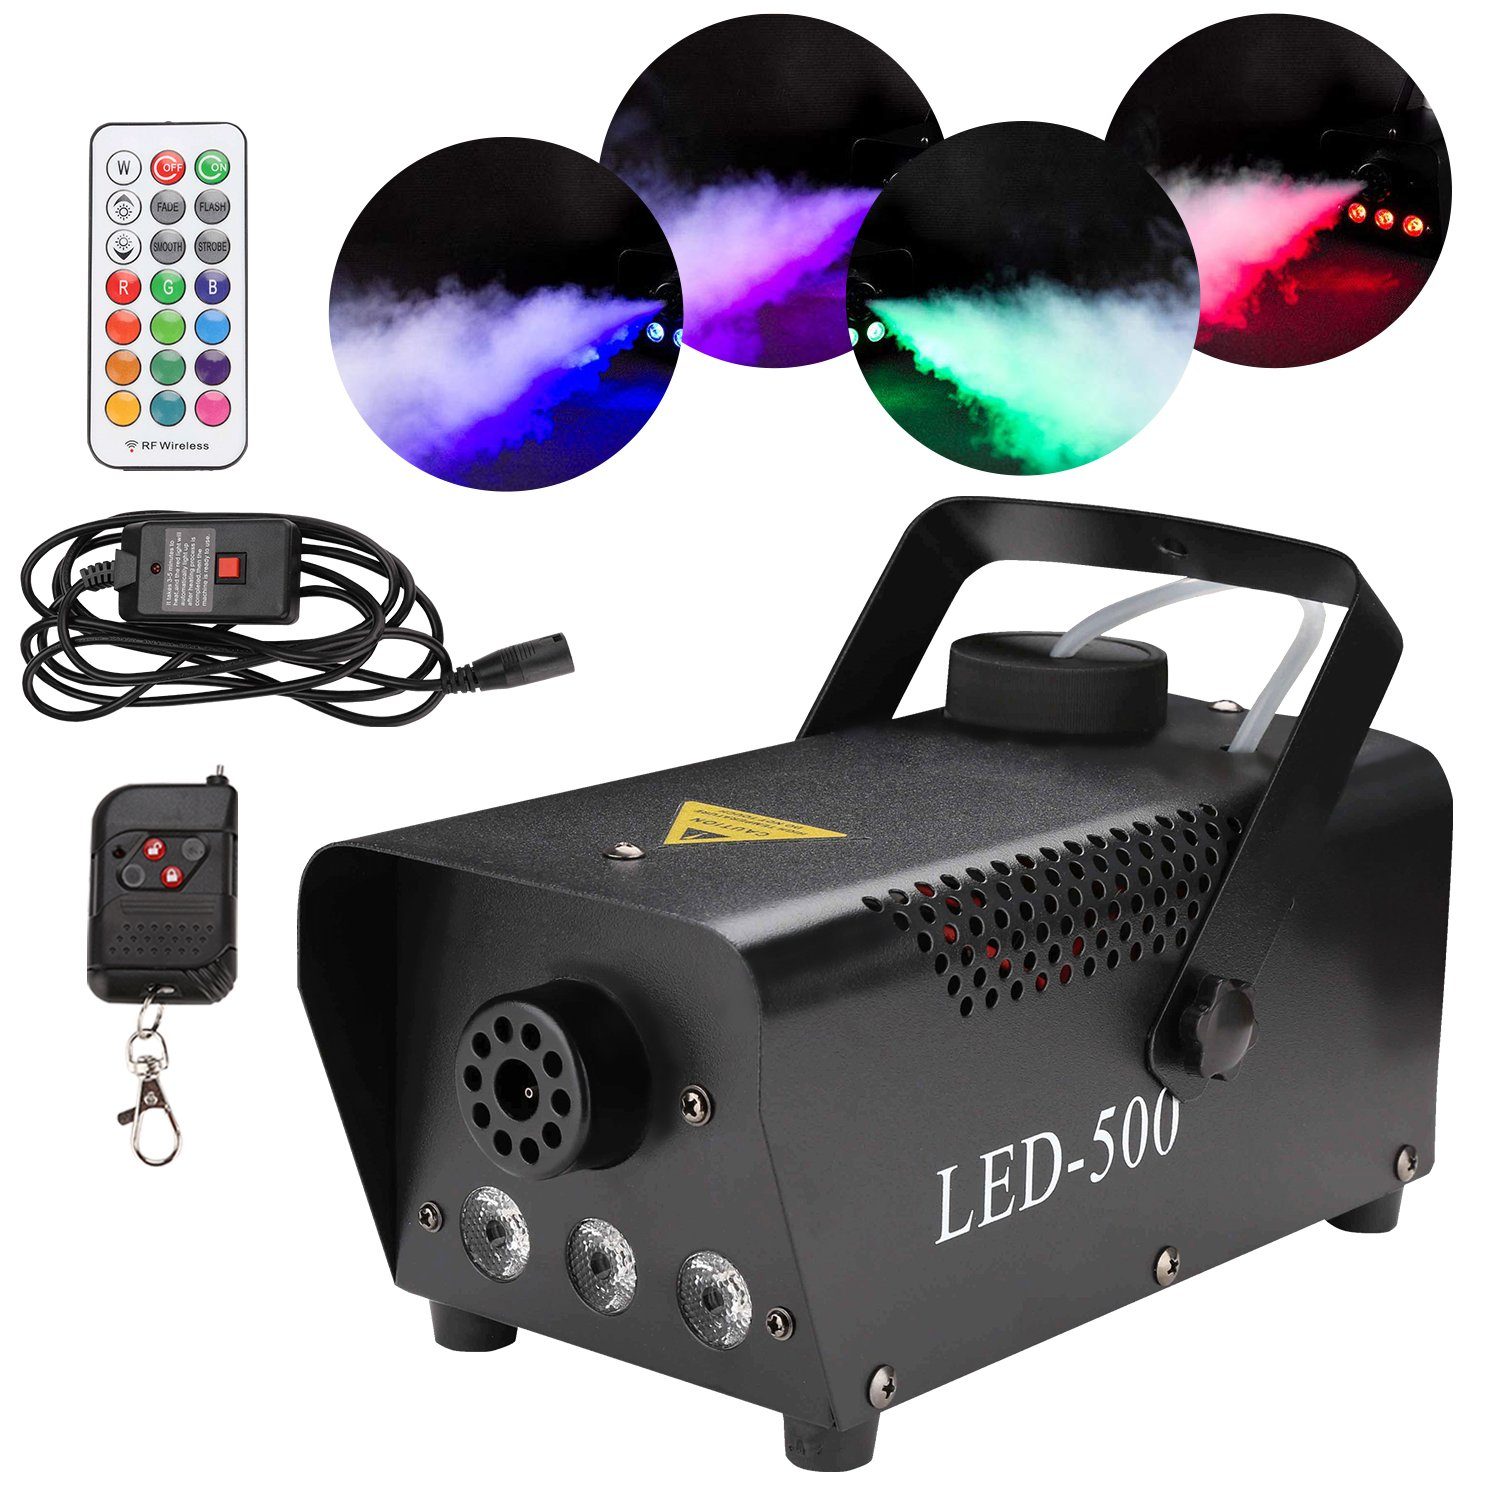 Gimisgu LED Discolicht Nebelmaschine Rauchmaschine RGB 500W Bodennebelmaschine Dunstnebel LED